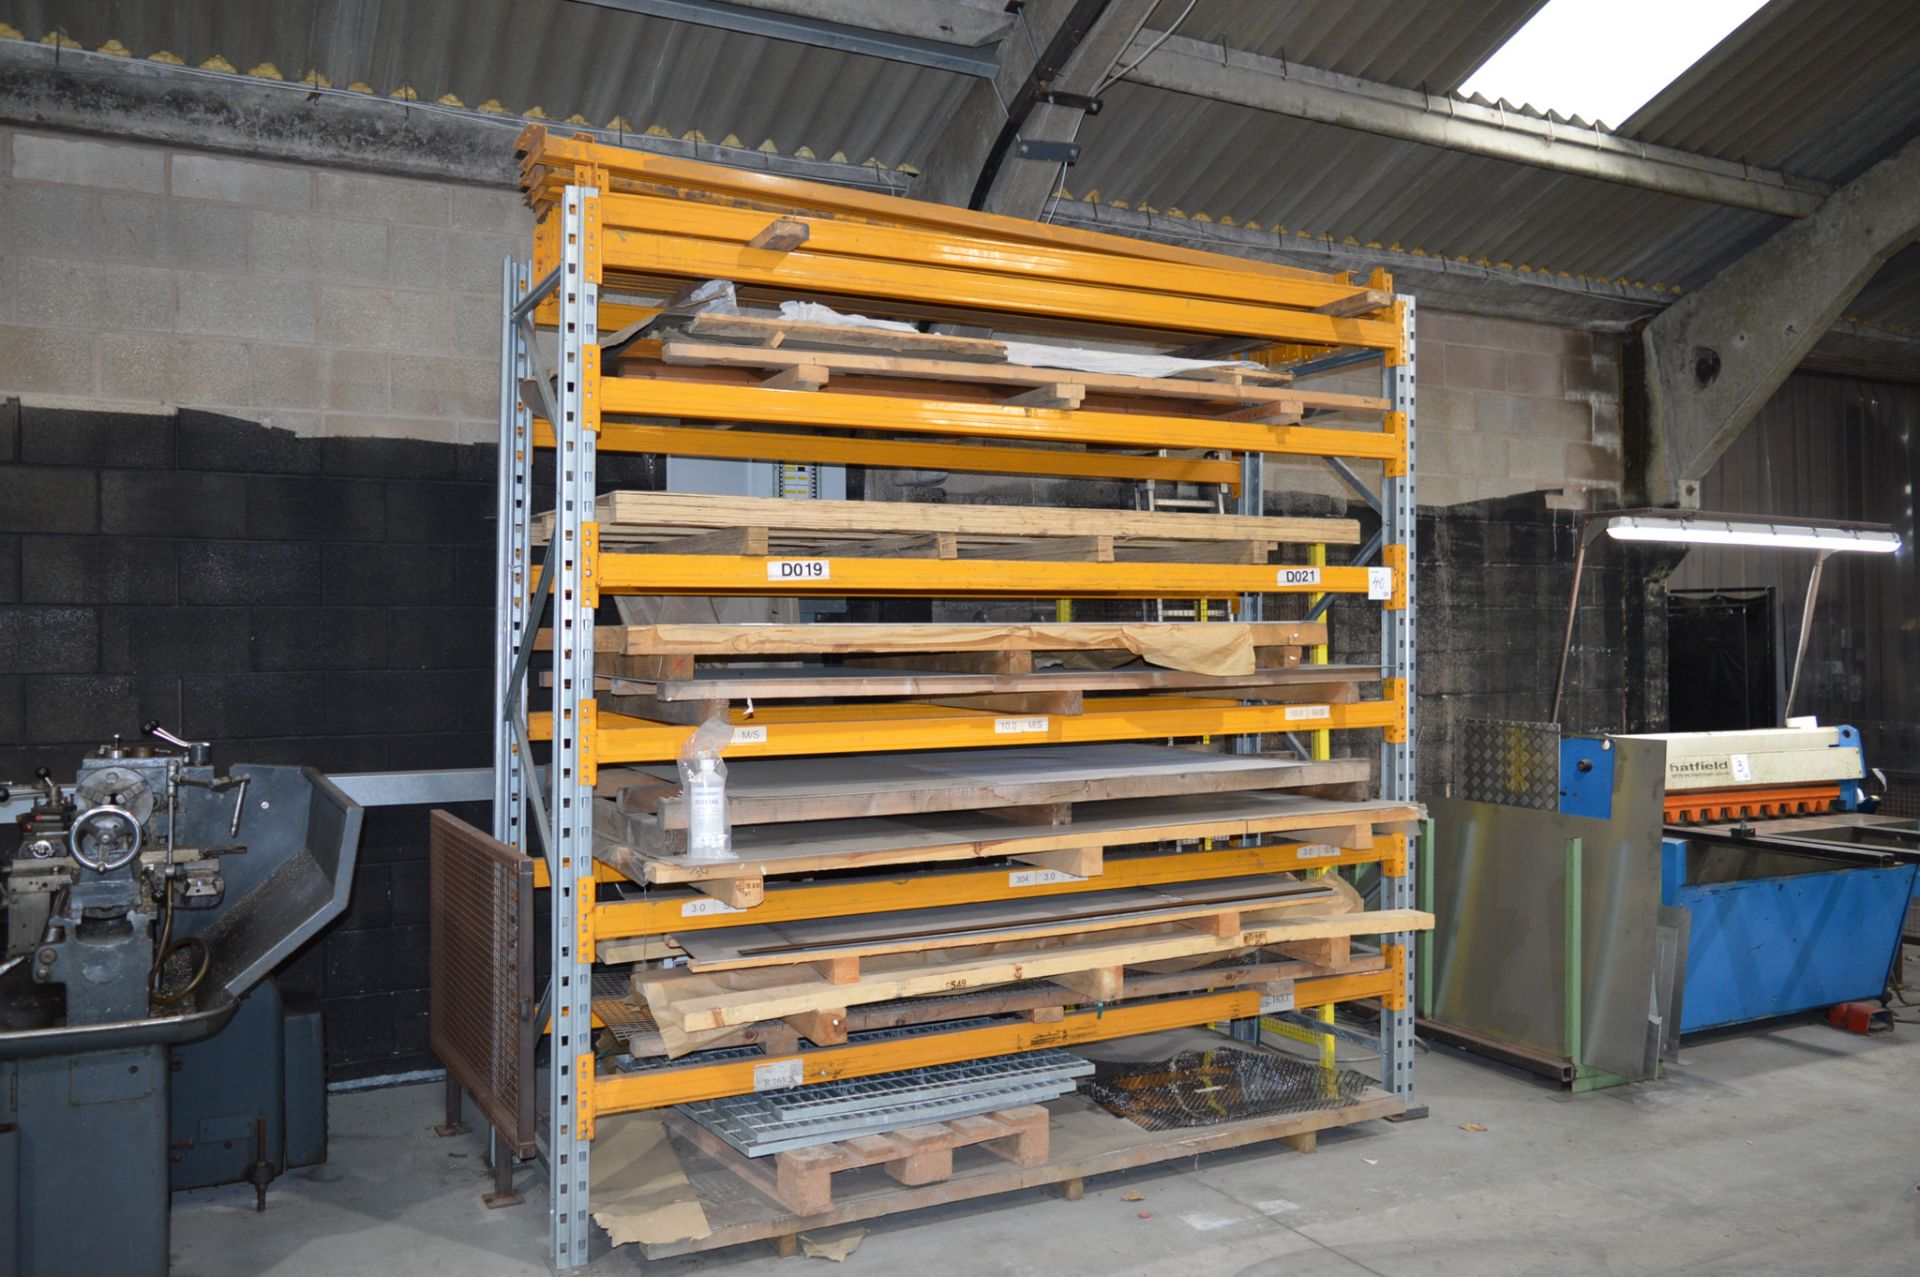 2 - bays of boltless steel pallet racks Comprising: 4 - end frames each 900mm x 2750mm high 36 -